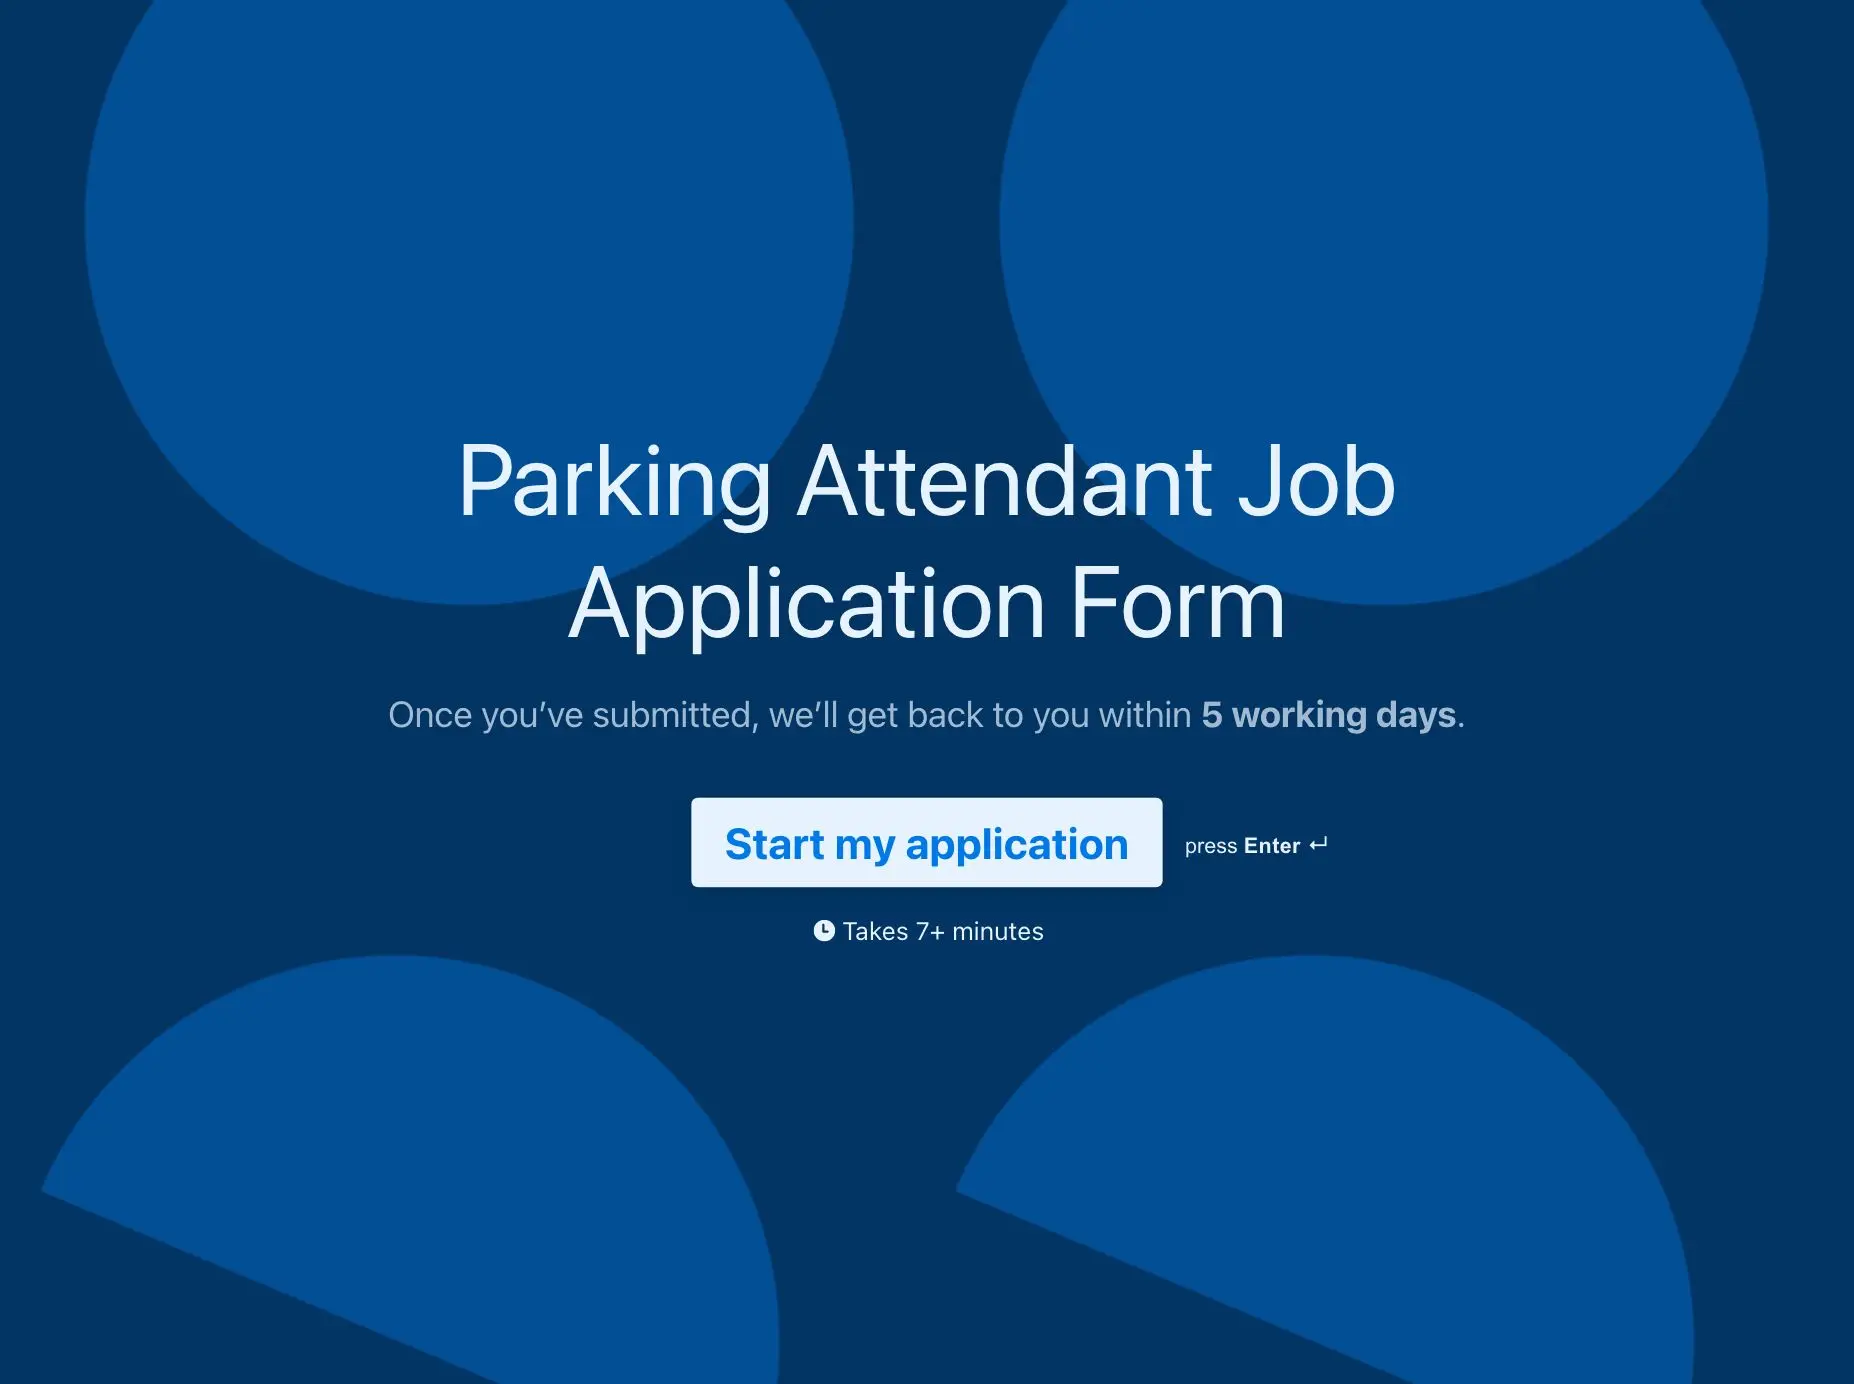 Parking Attendant Job Application Form Template Hero